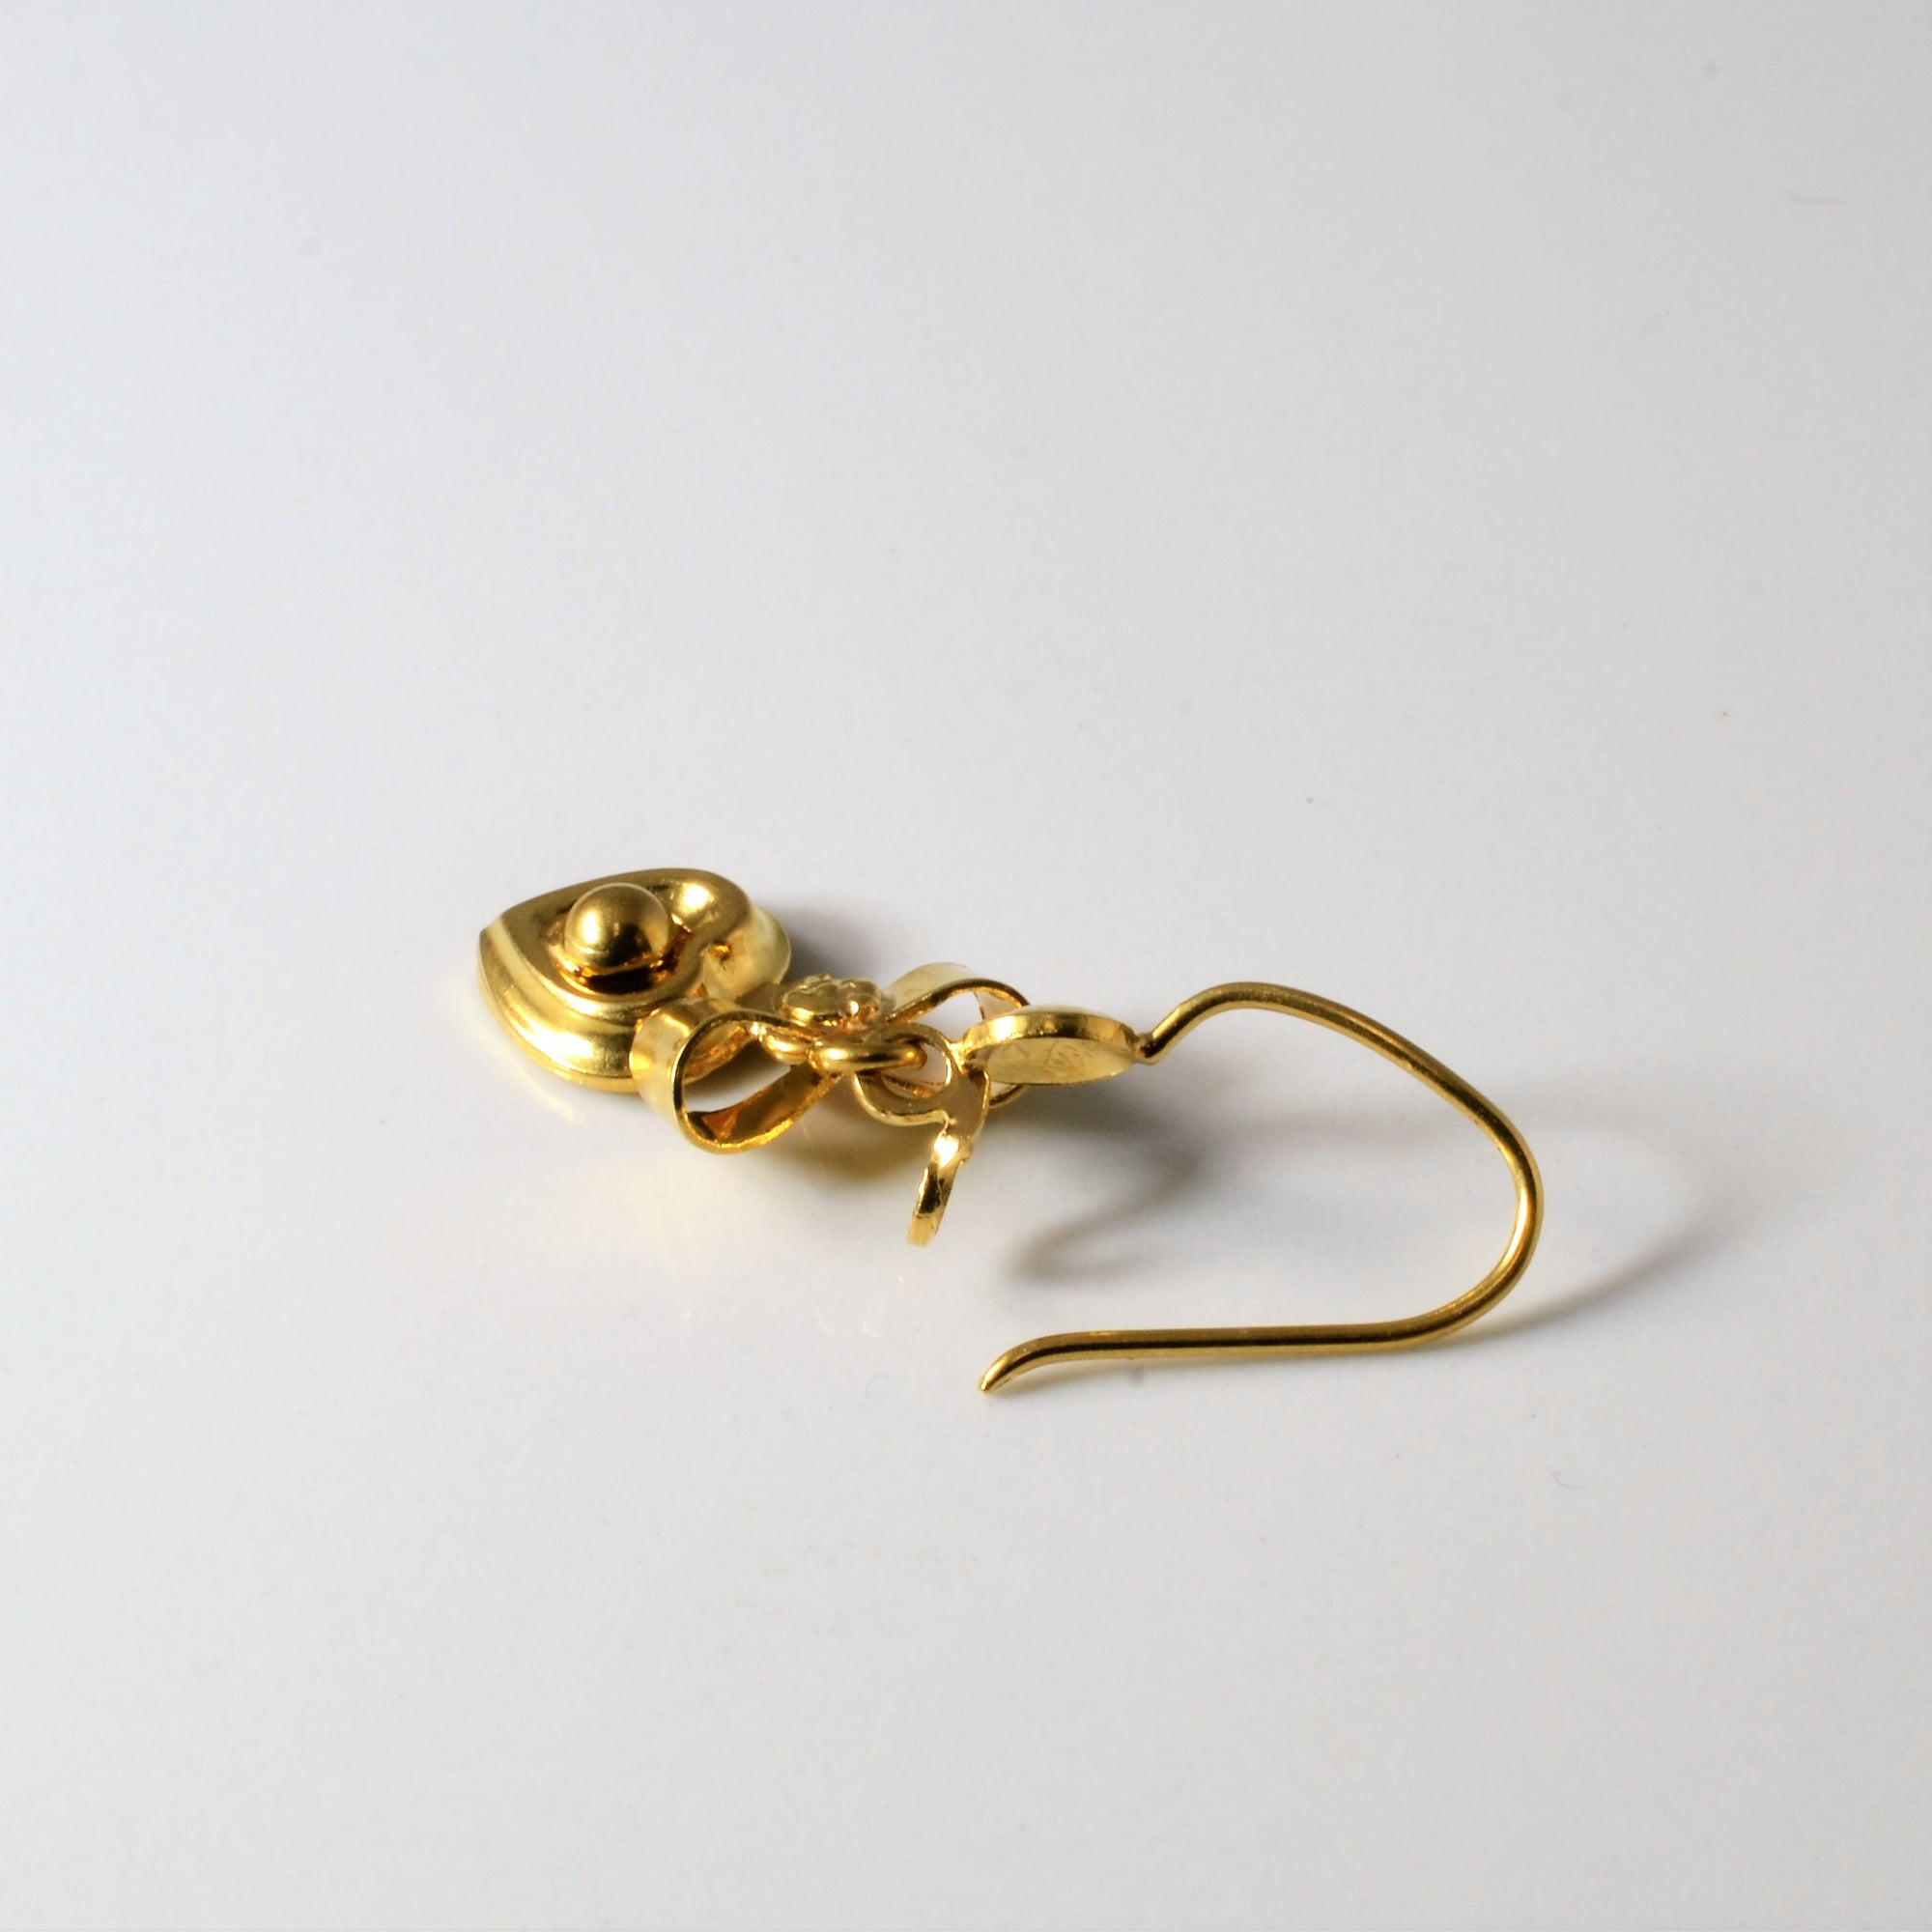 18k Yellow Gold Heart & Bow Design Dangle Earrings